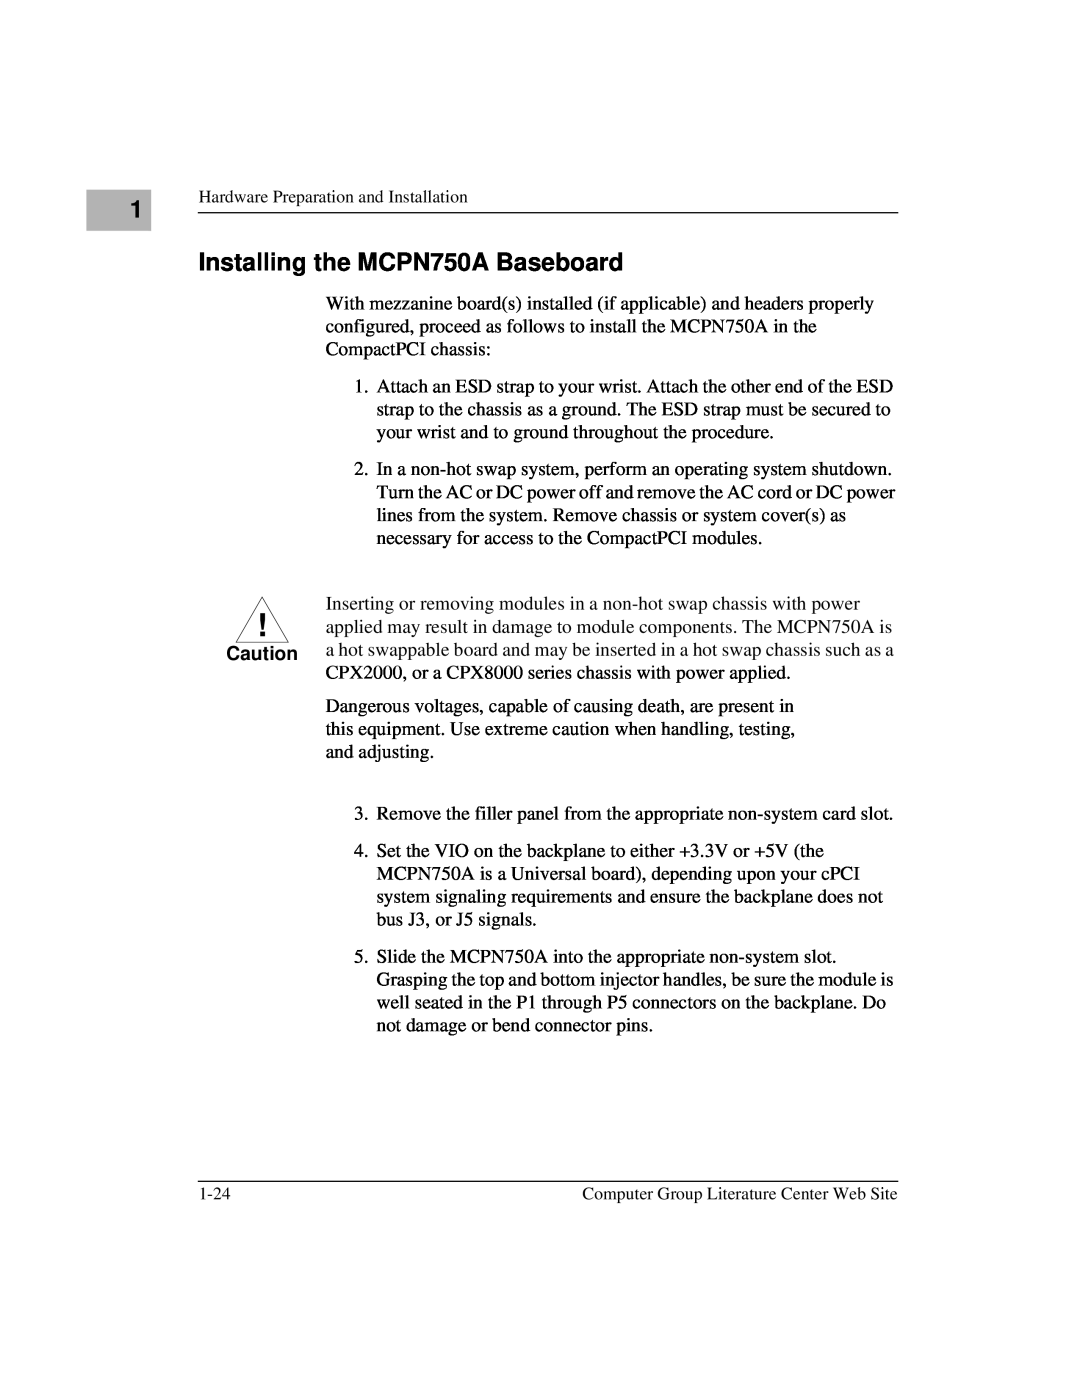 Motorola IH5 manual Installing the MCPN750A Baseboard 